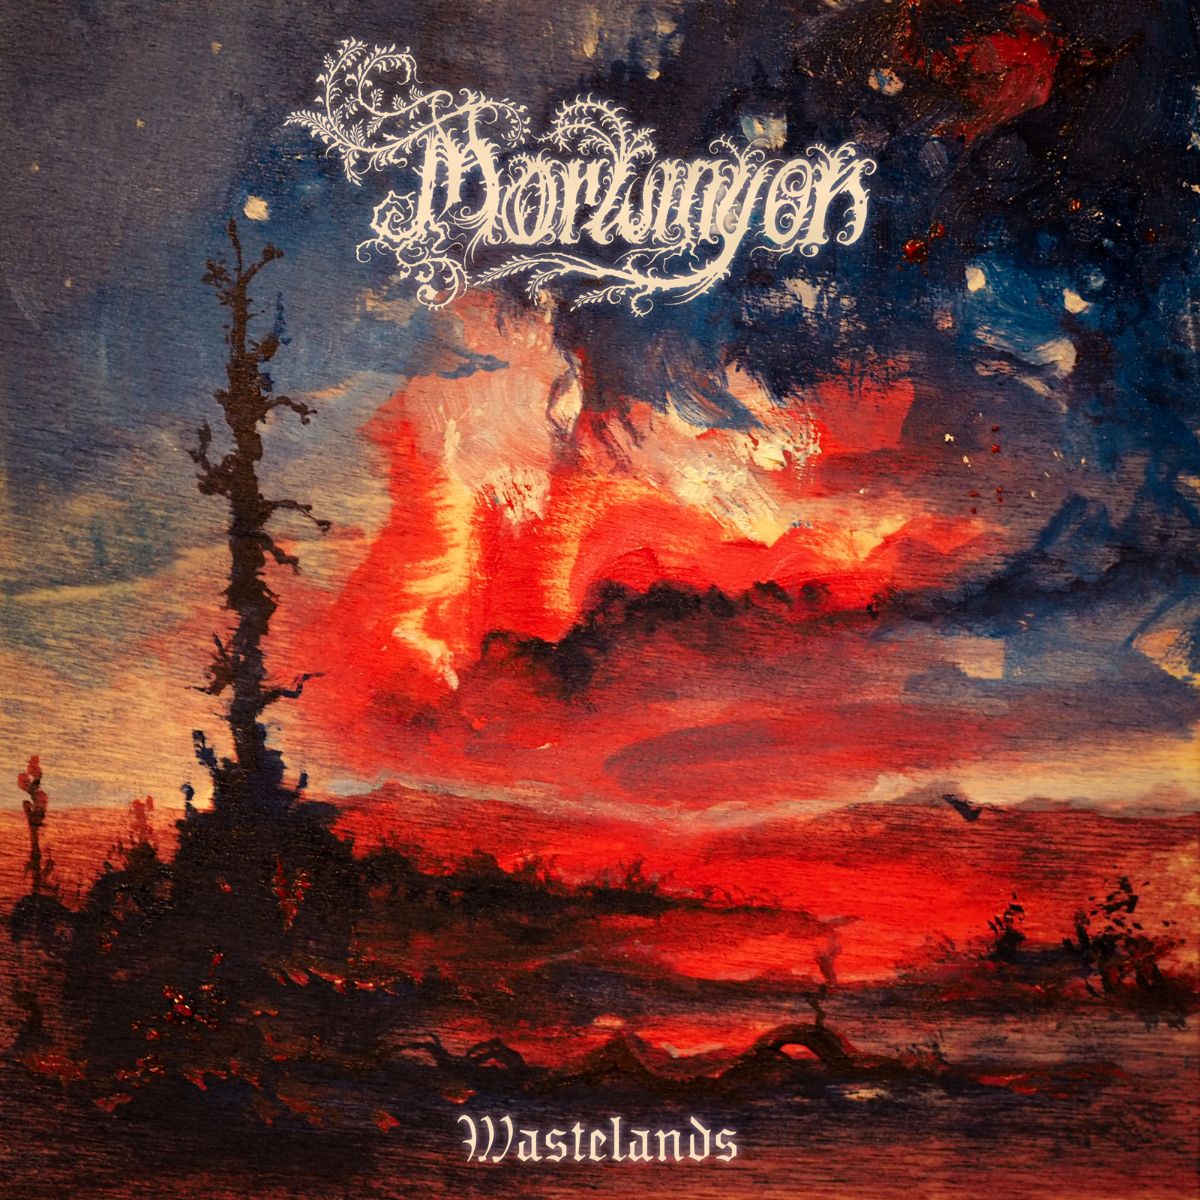 Morwinyon: New album 'Wastelands' is out now -> naturmacht.com/np160-morwinyo… #morwinyon #wastelands #naturmachtproductions #atmosphericblackmetal #ambientblackmetal #postblackmetal #natureblackmetal #italy #cd